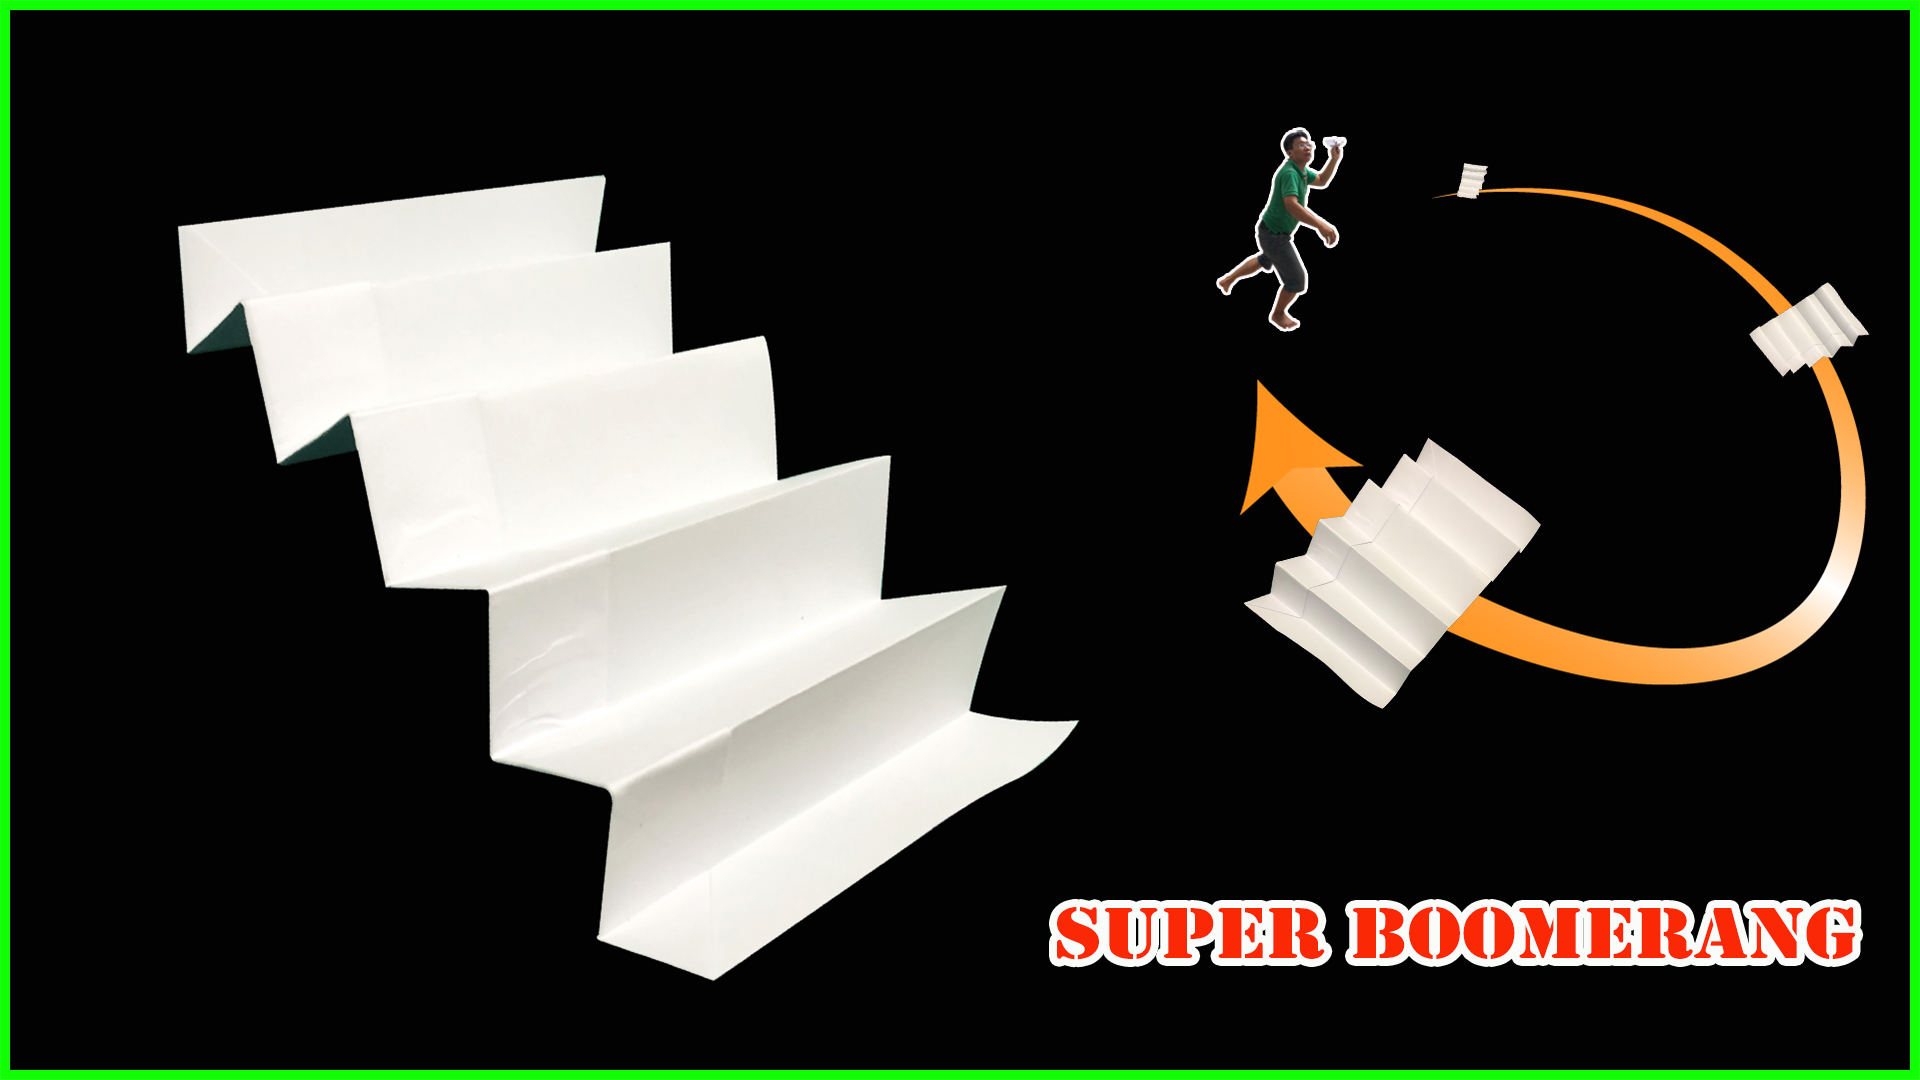 Siêu máy bay Boomerang bằng giấy - How to make a Super Paper Boomerang Airplane